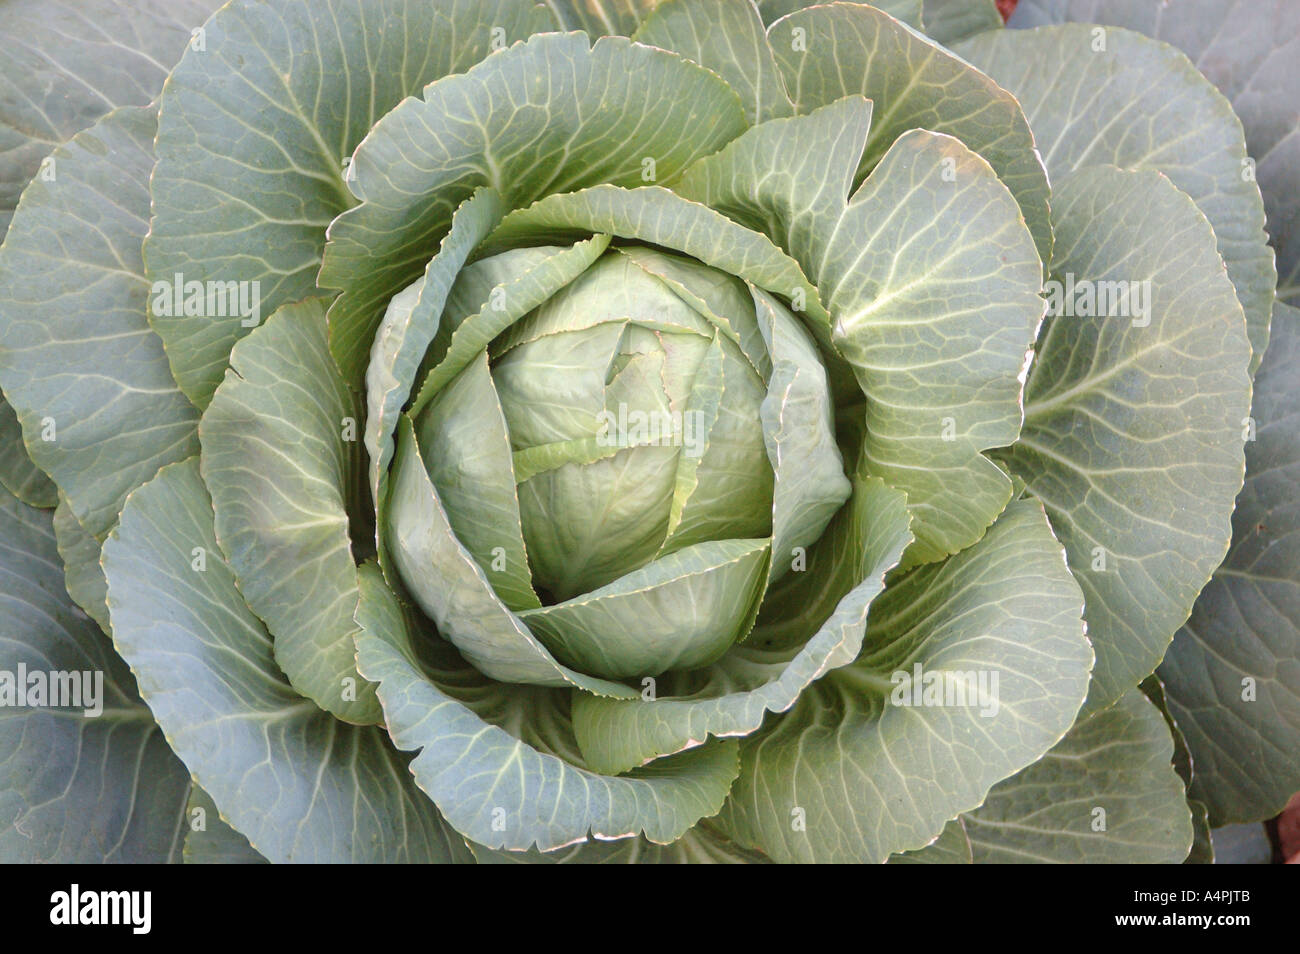 ANG77777 Vegetable Cabbage Pattagobi Bandhgobi Brassica oleracea var capitata Stock Photo